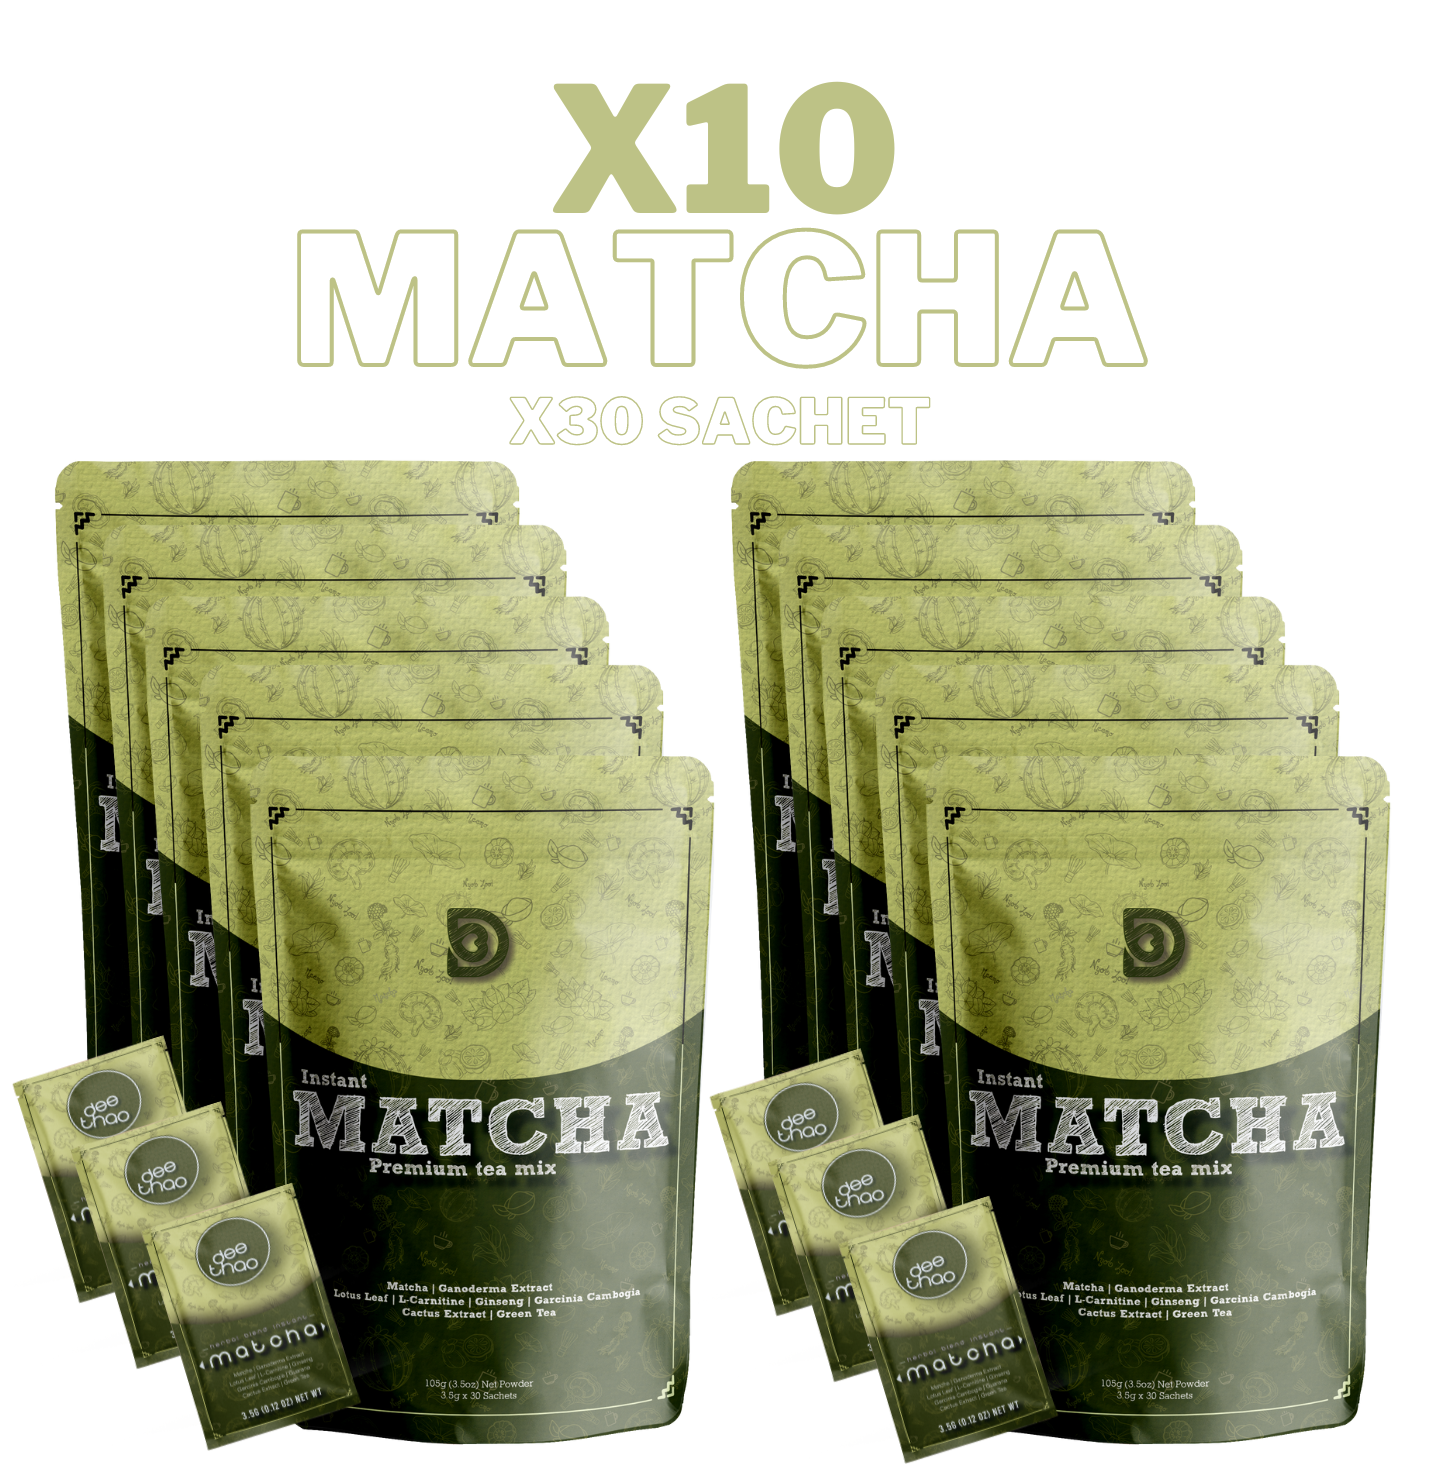 x10 - Dee Thao Matcha Box - x30 sachet